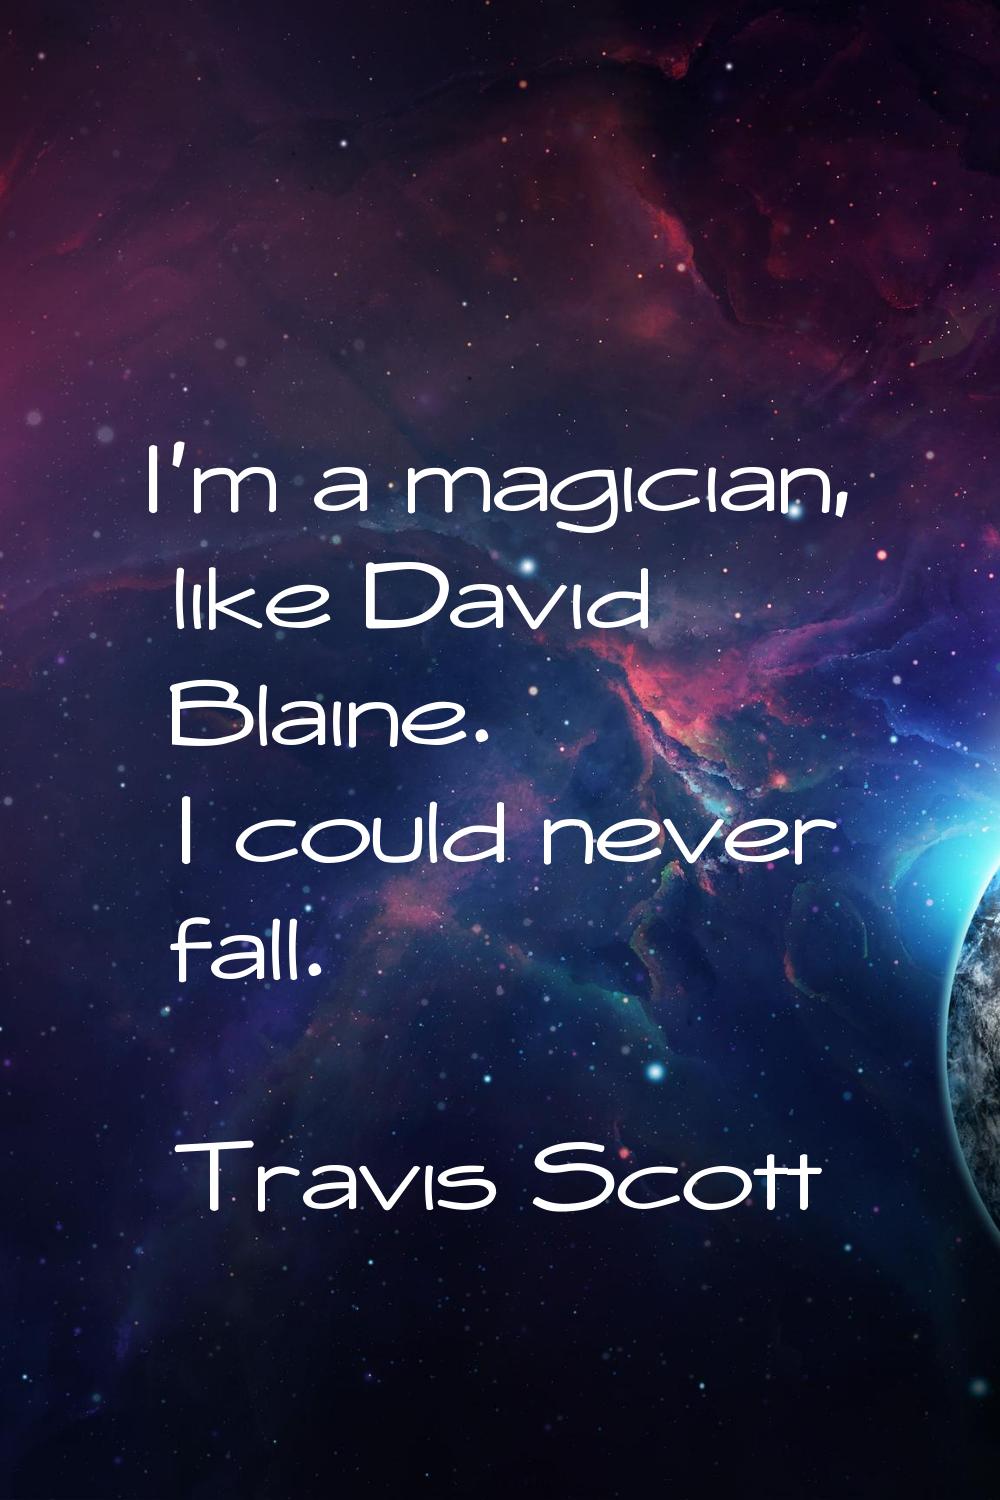 I'm a magician, like David Blaine. I could never fall.